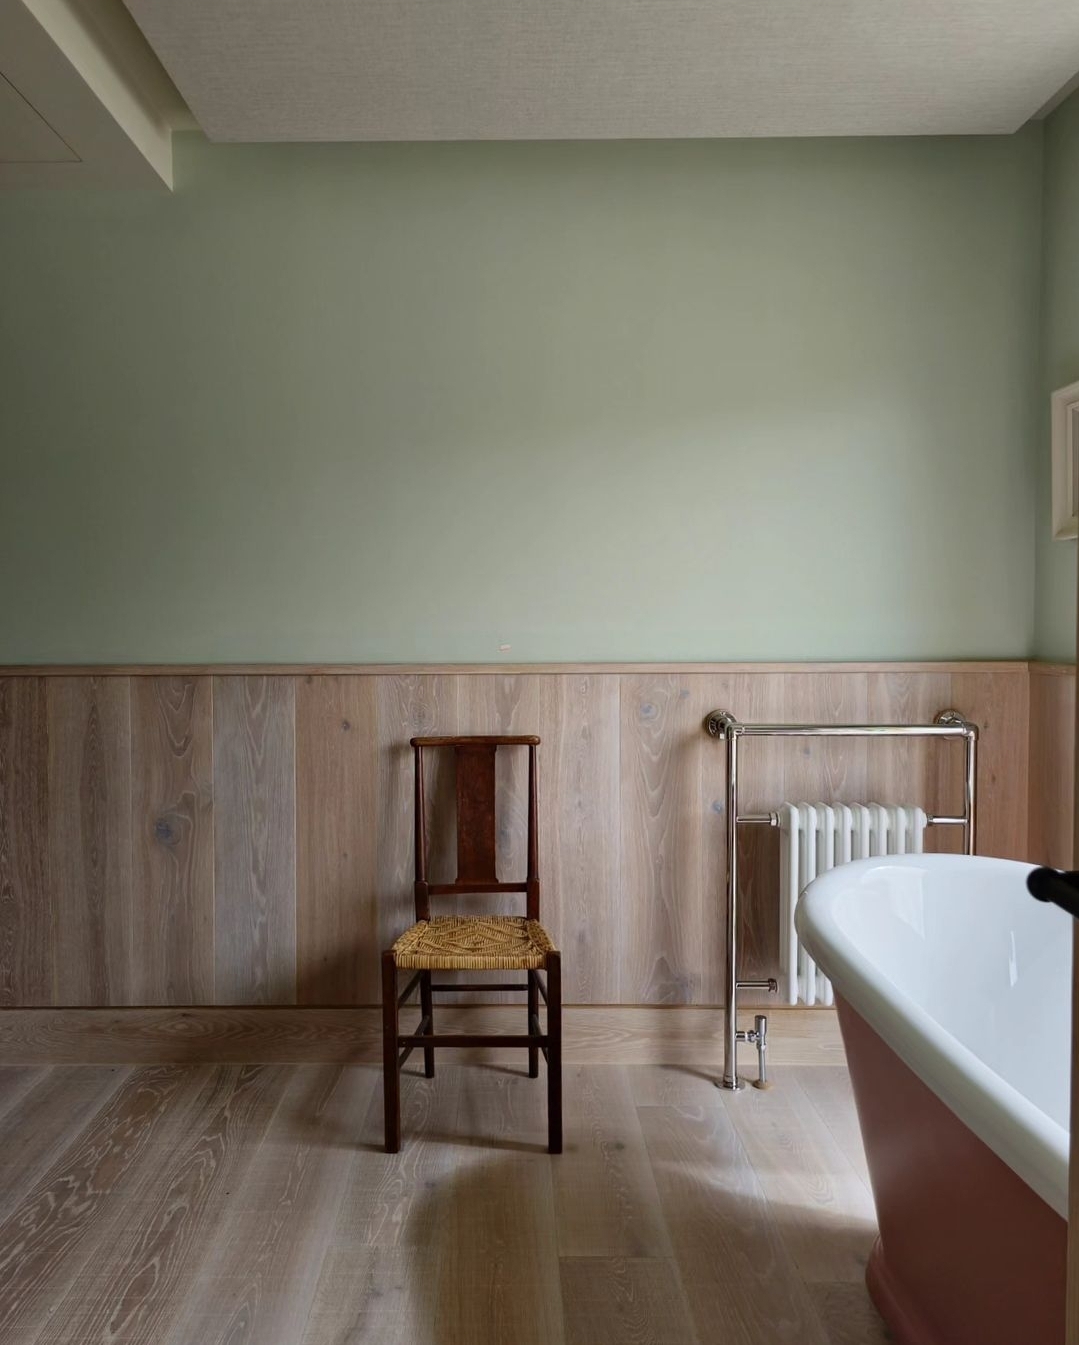 Sawn and Brushed light oak flooring in master bathroom suite